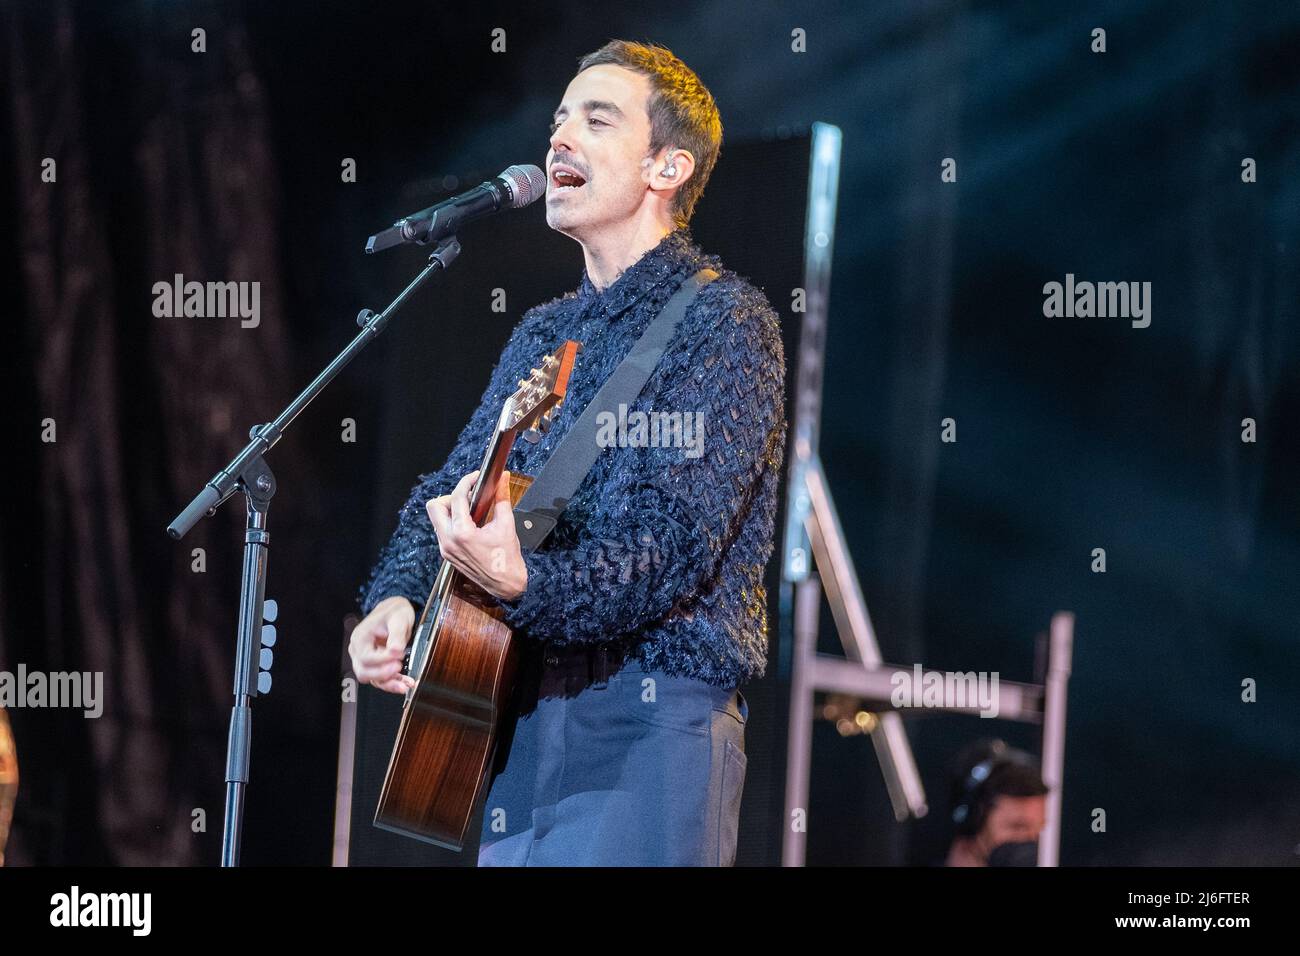 Italian singer Antonio Diodato live performs at Arena di Verona 19rd september 2021 for his tour 'L'Arena' Stock Photo